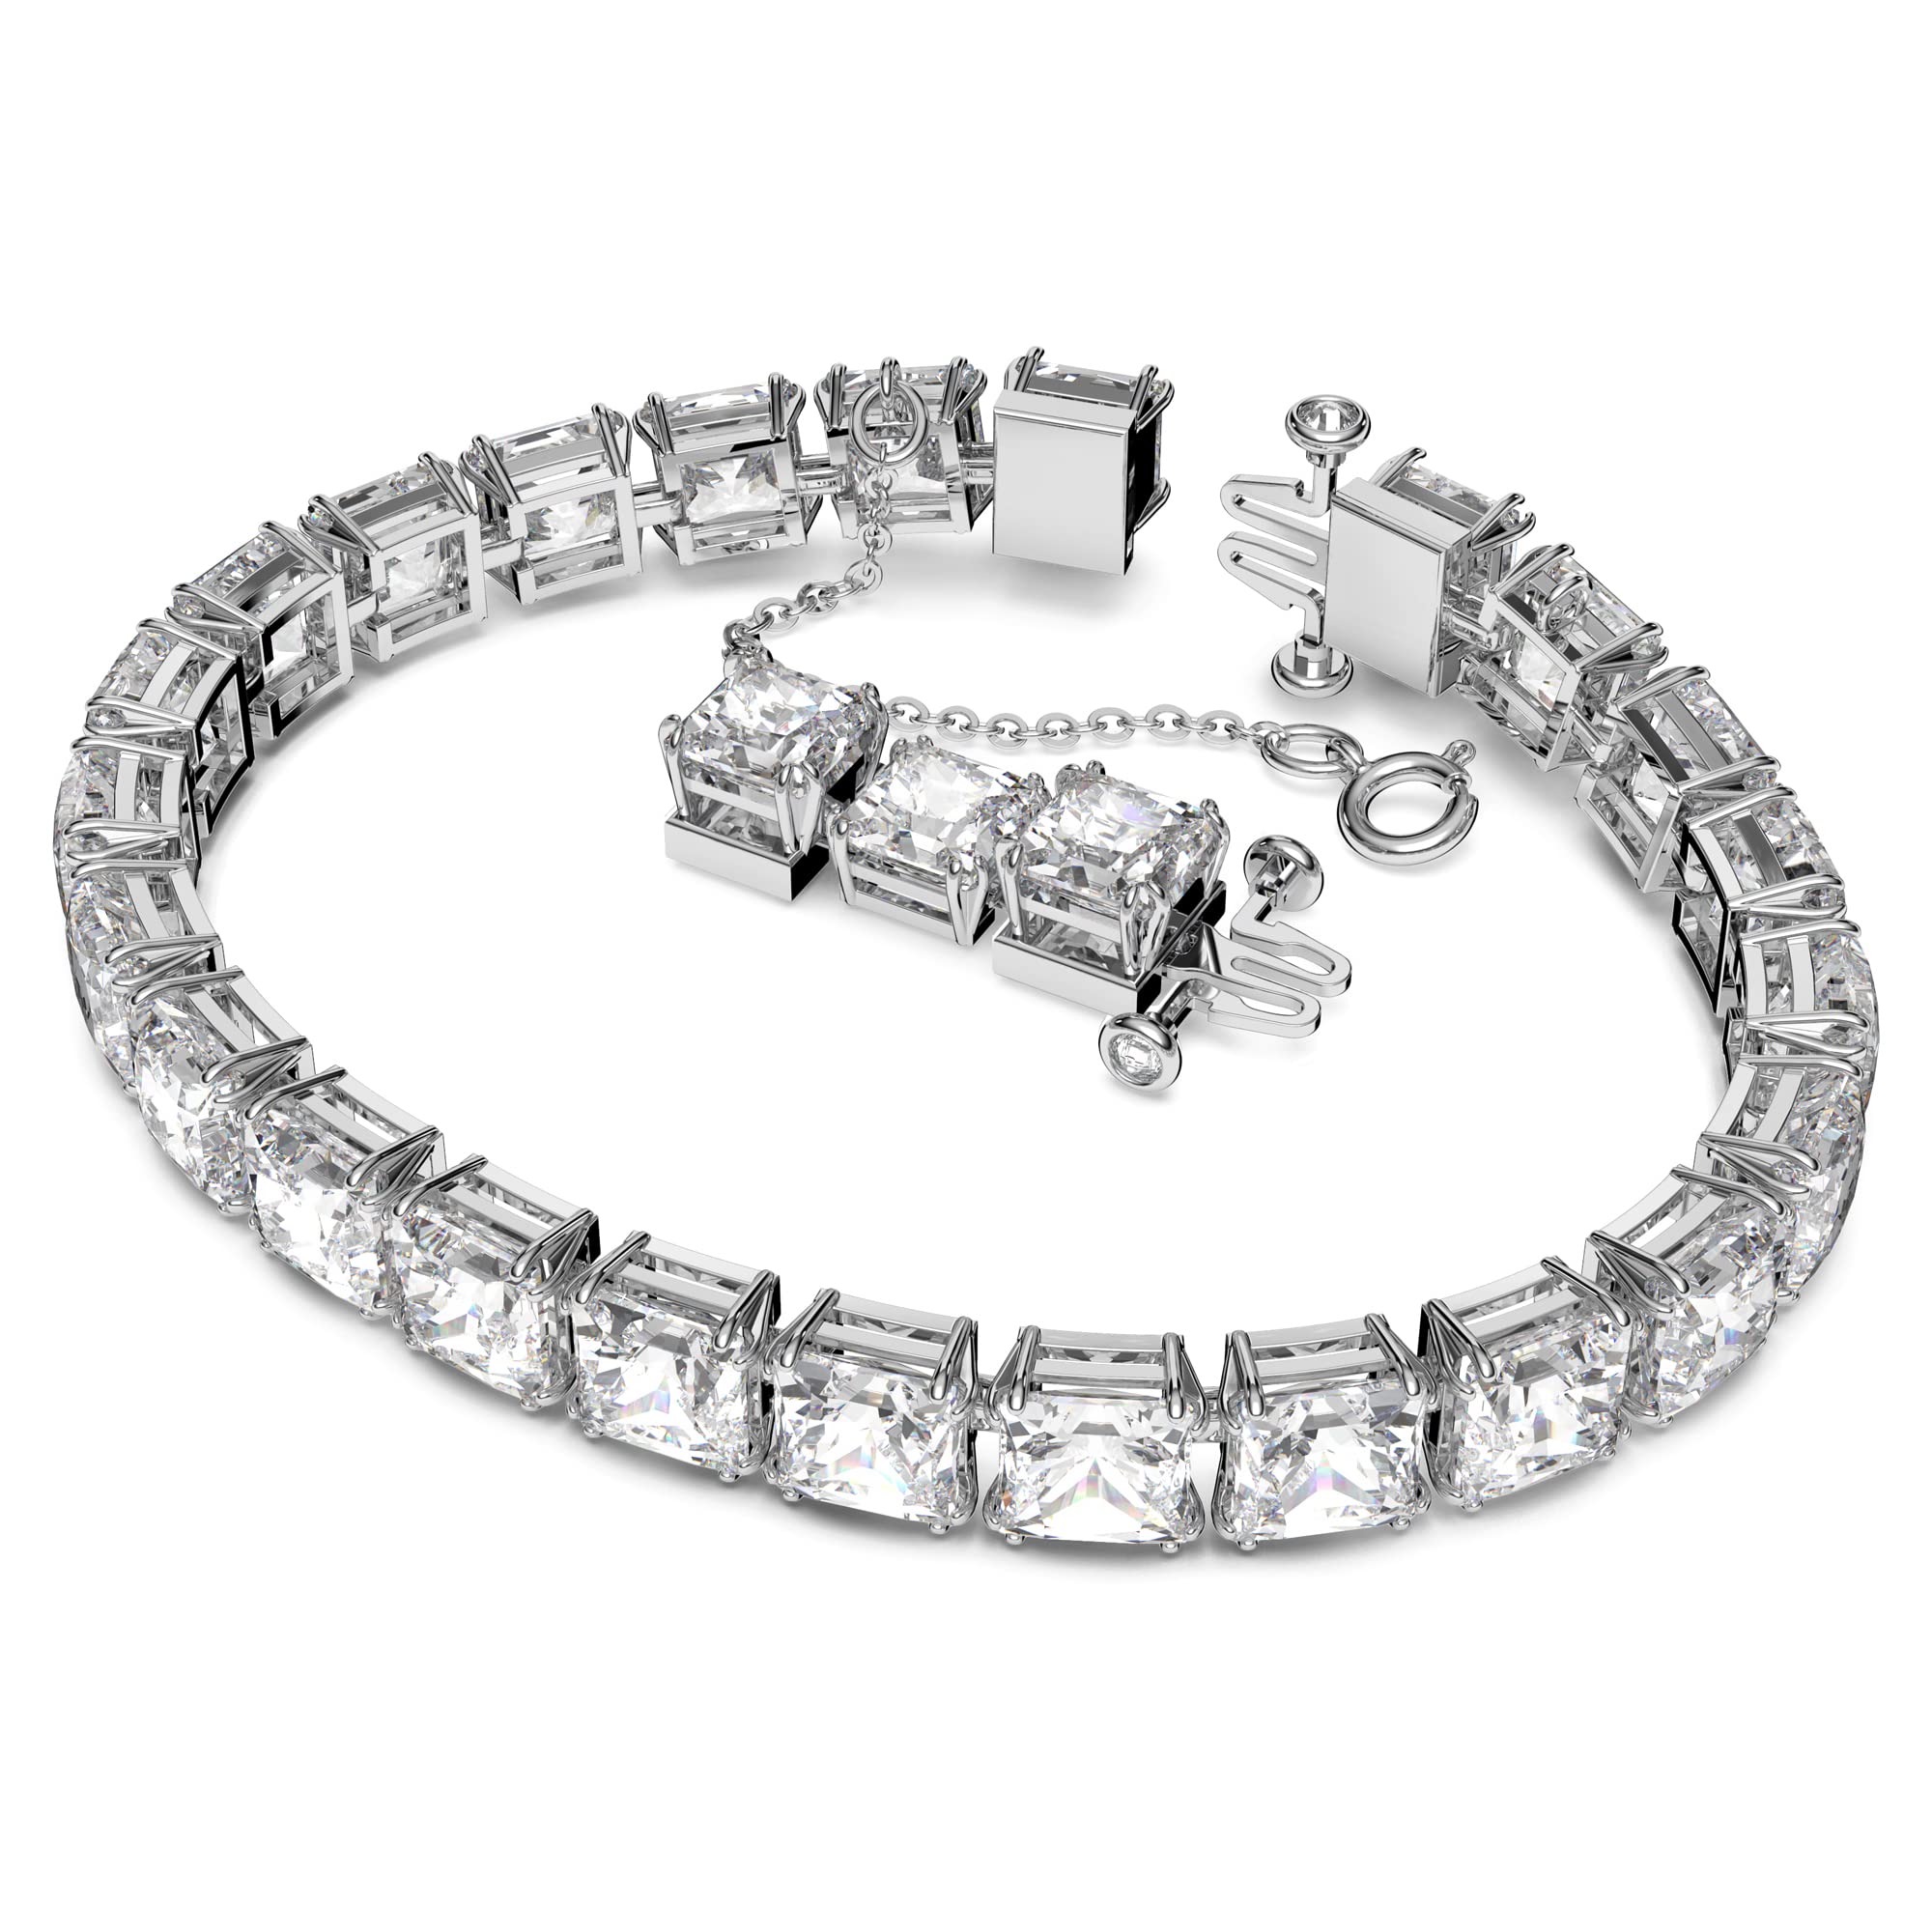 SWAROVSKI Millenia Bracelet & Earrings Crystal Jewelry Collection